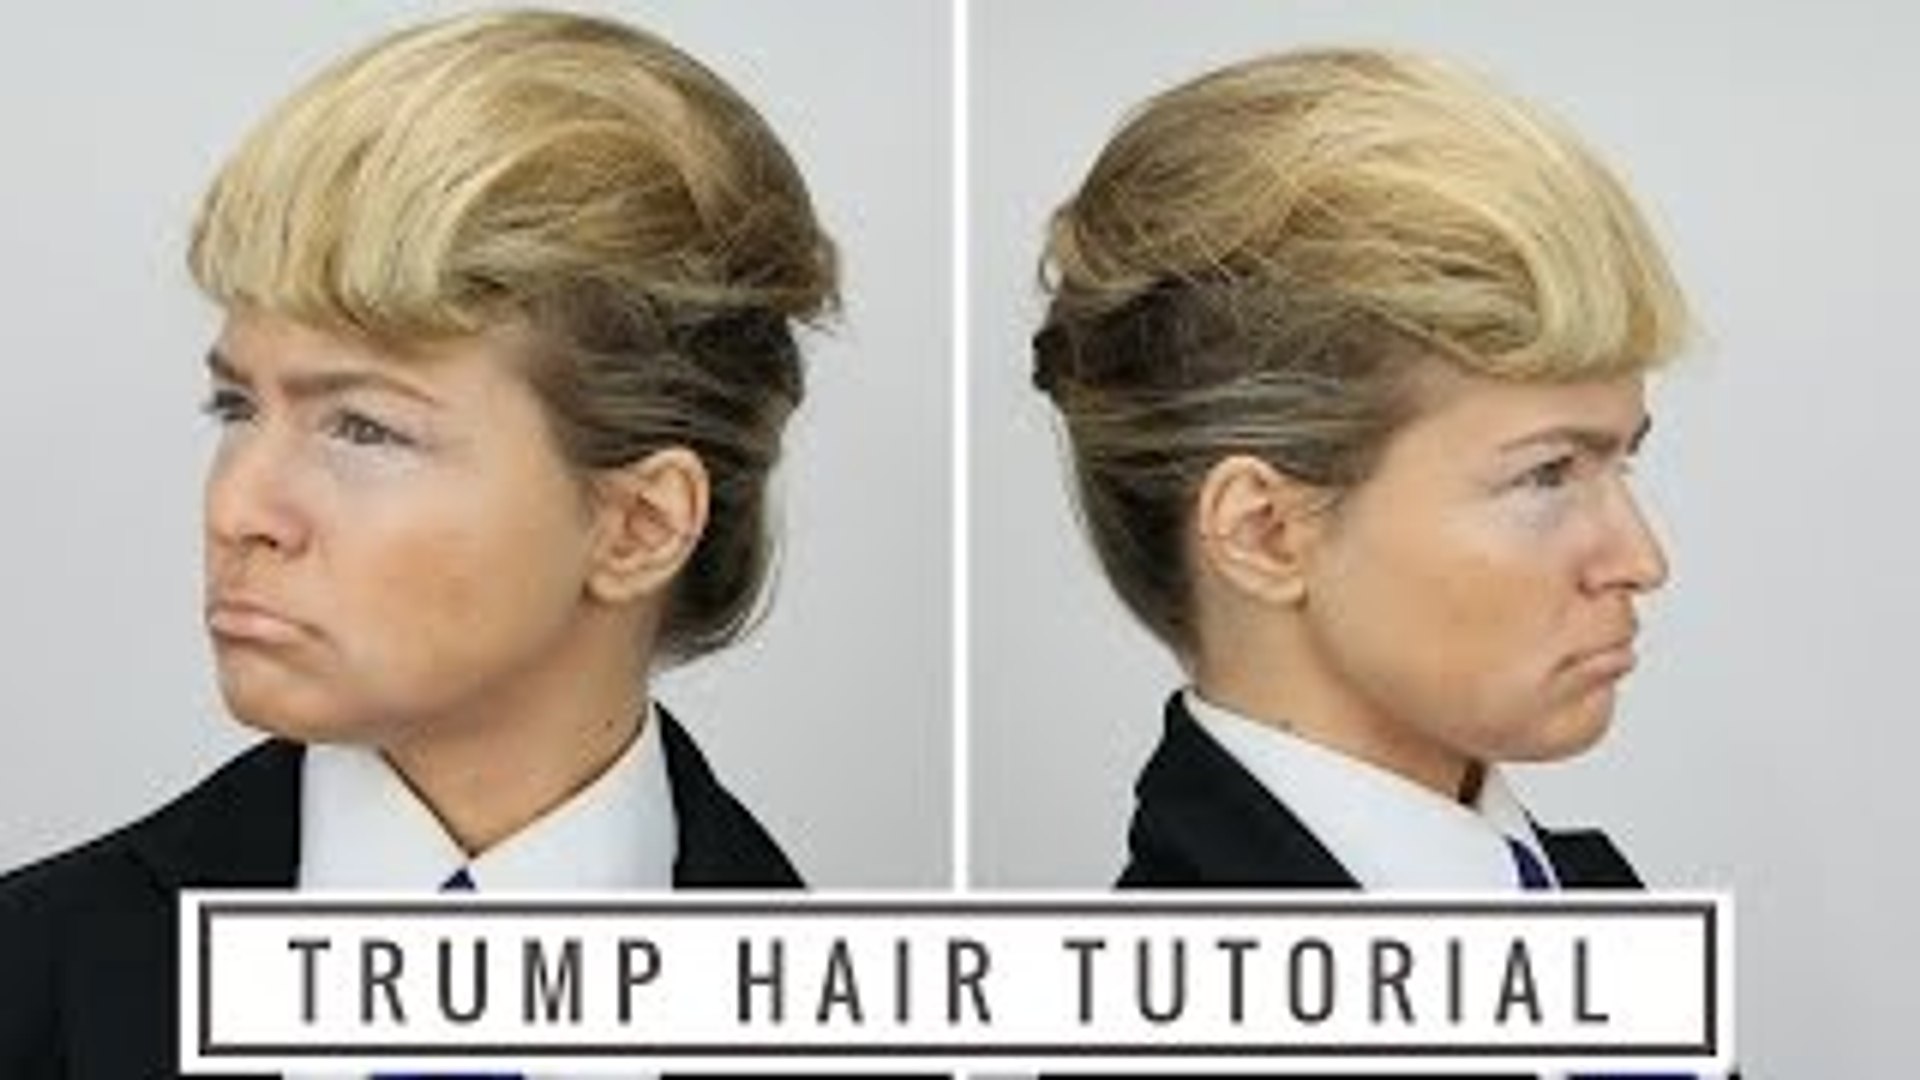 Donald Trump Hair Tutorial - Dailymotion Video